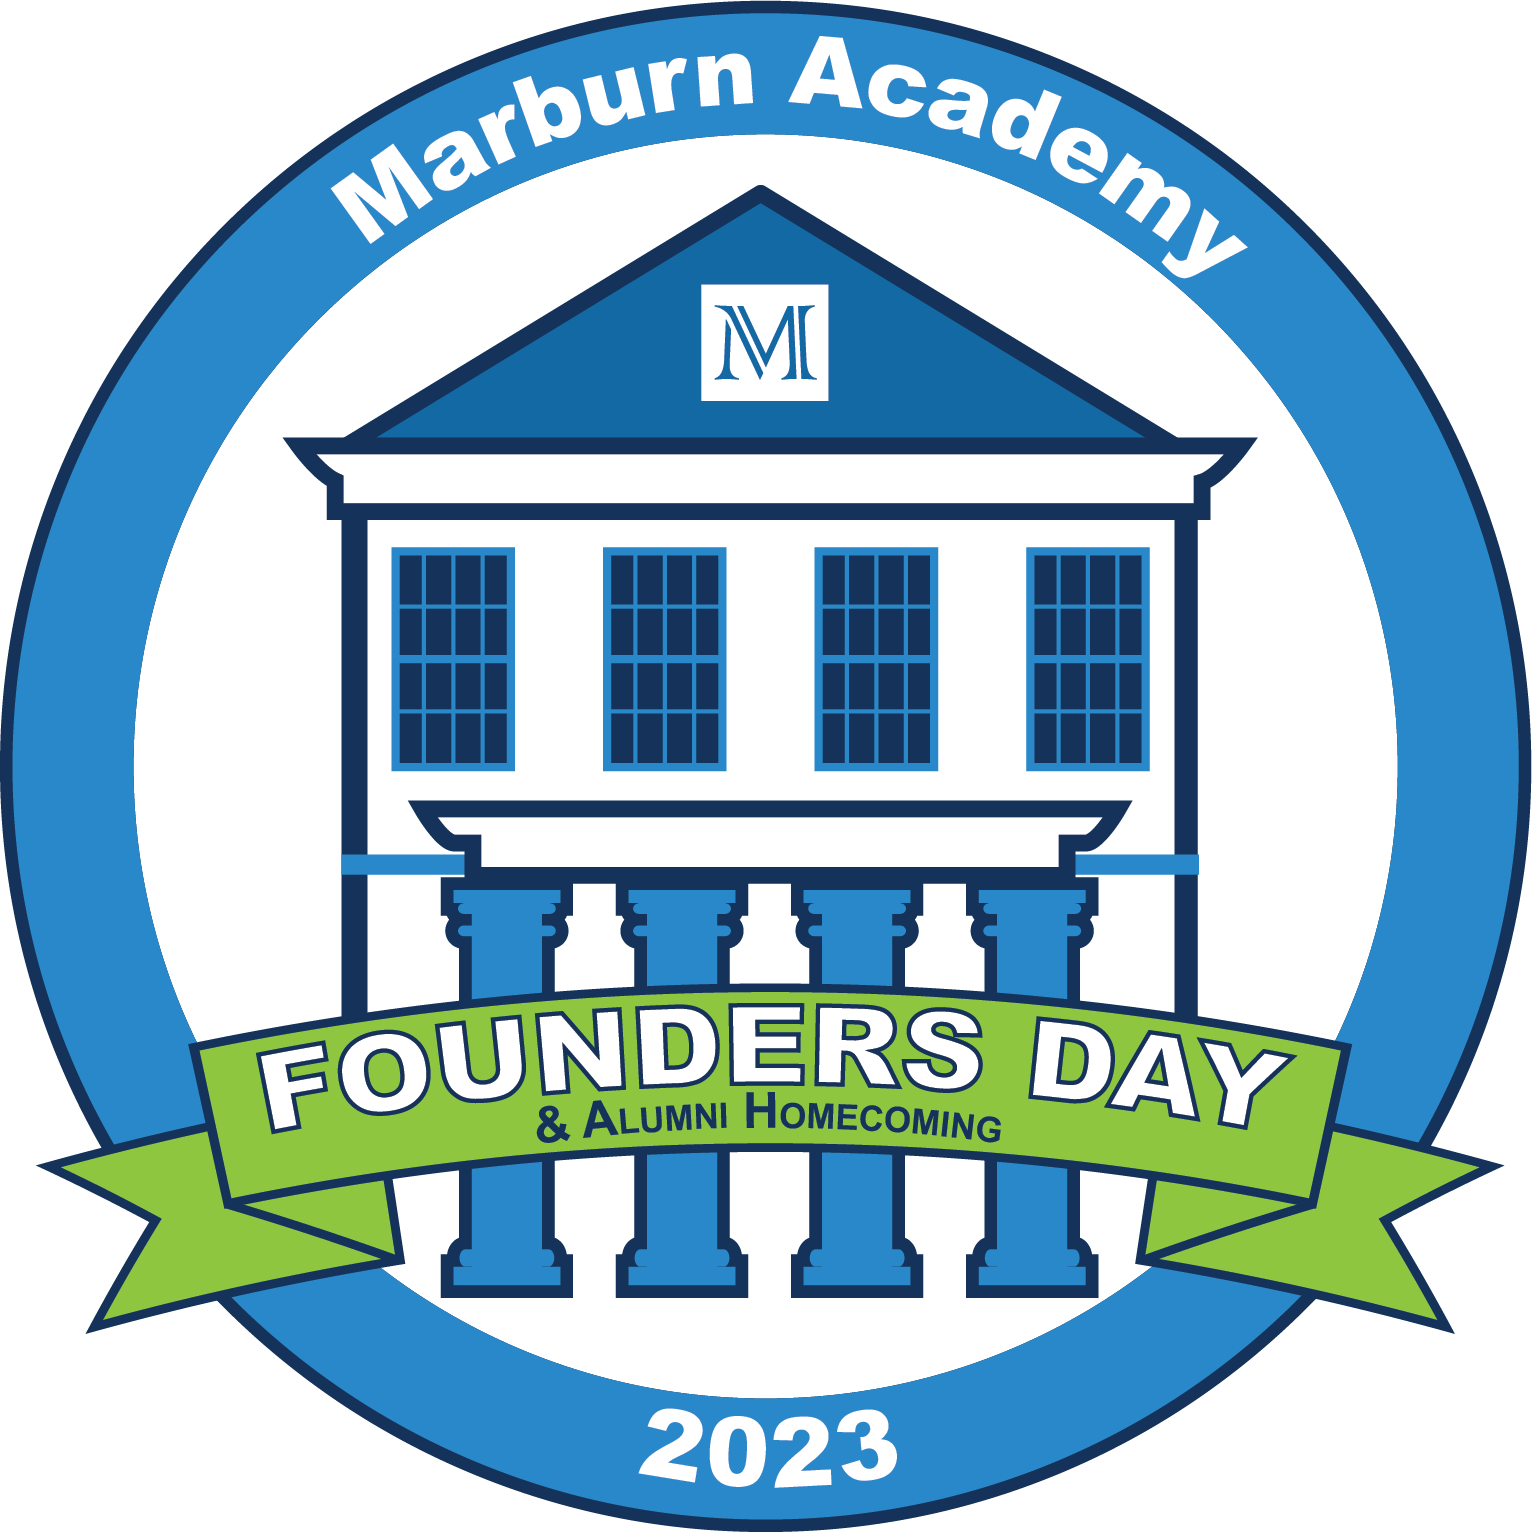 Founders Day Marburn Academy